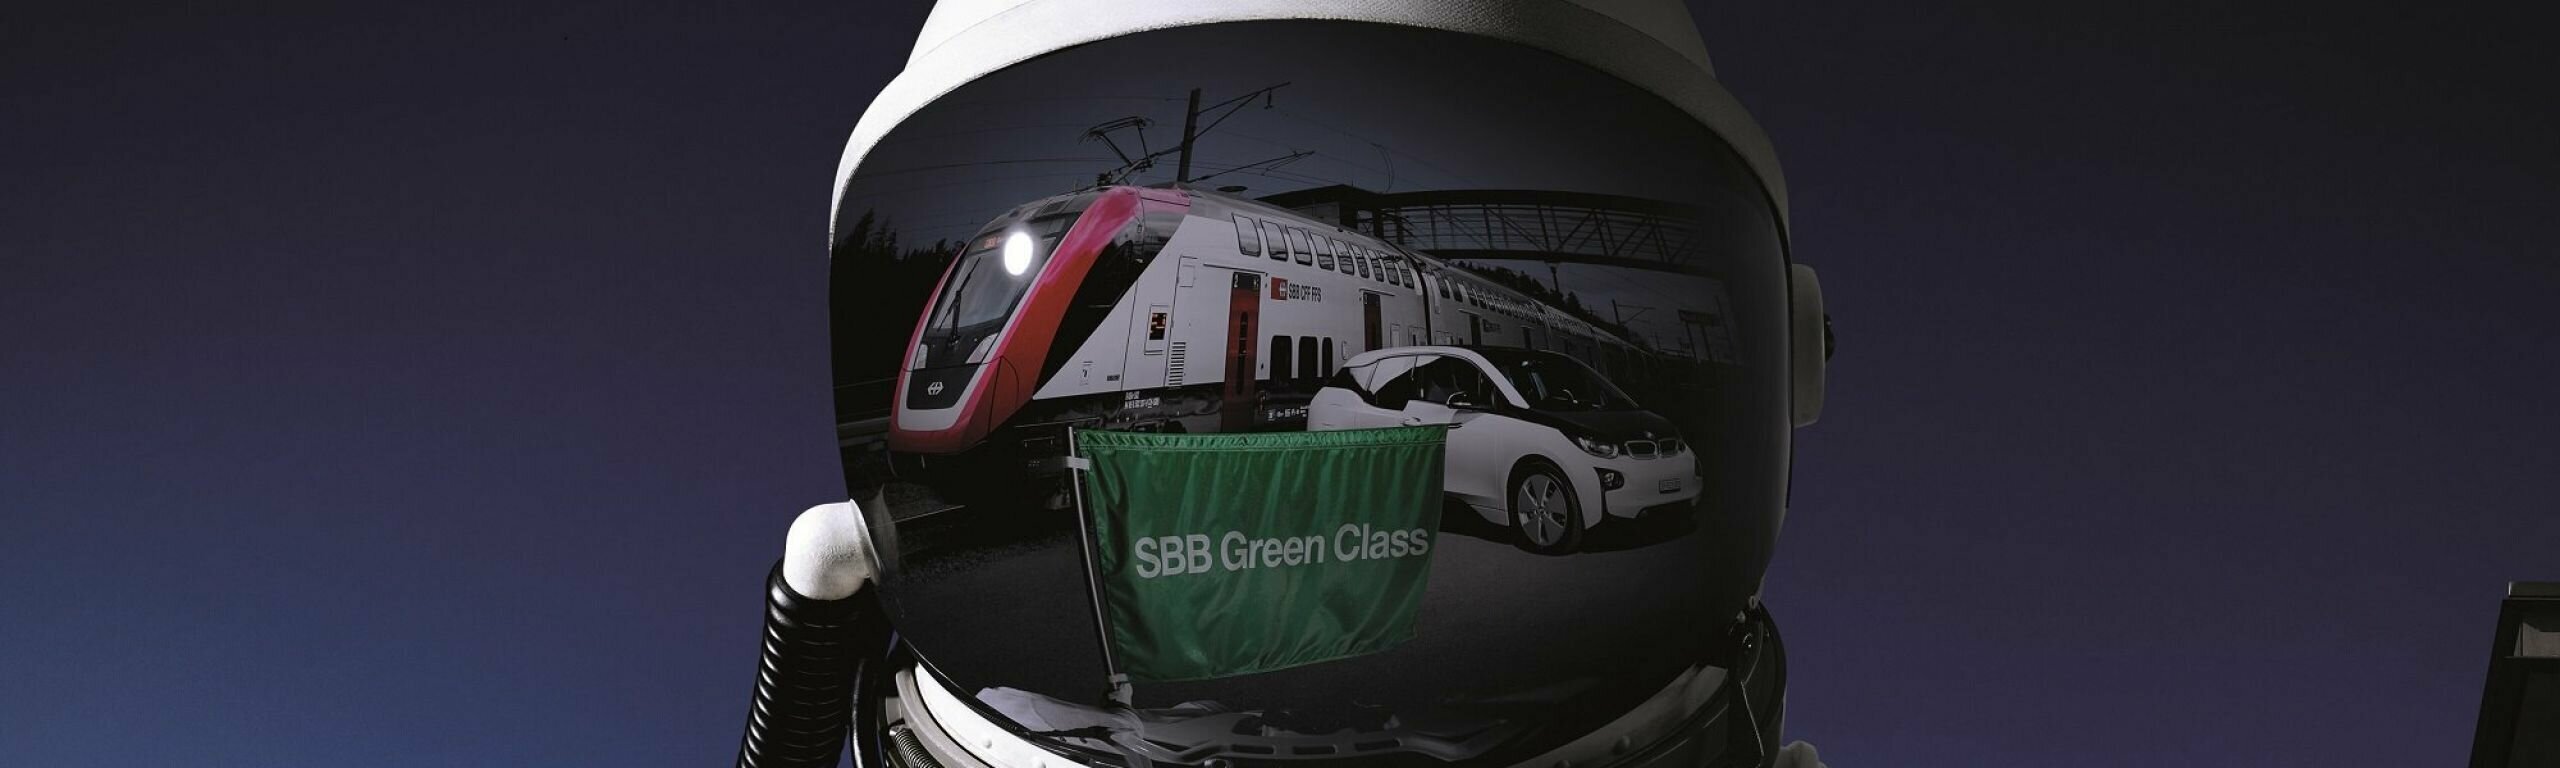 SBB Green Class